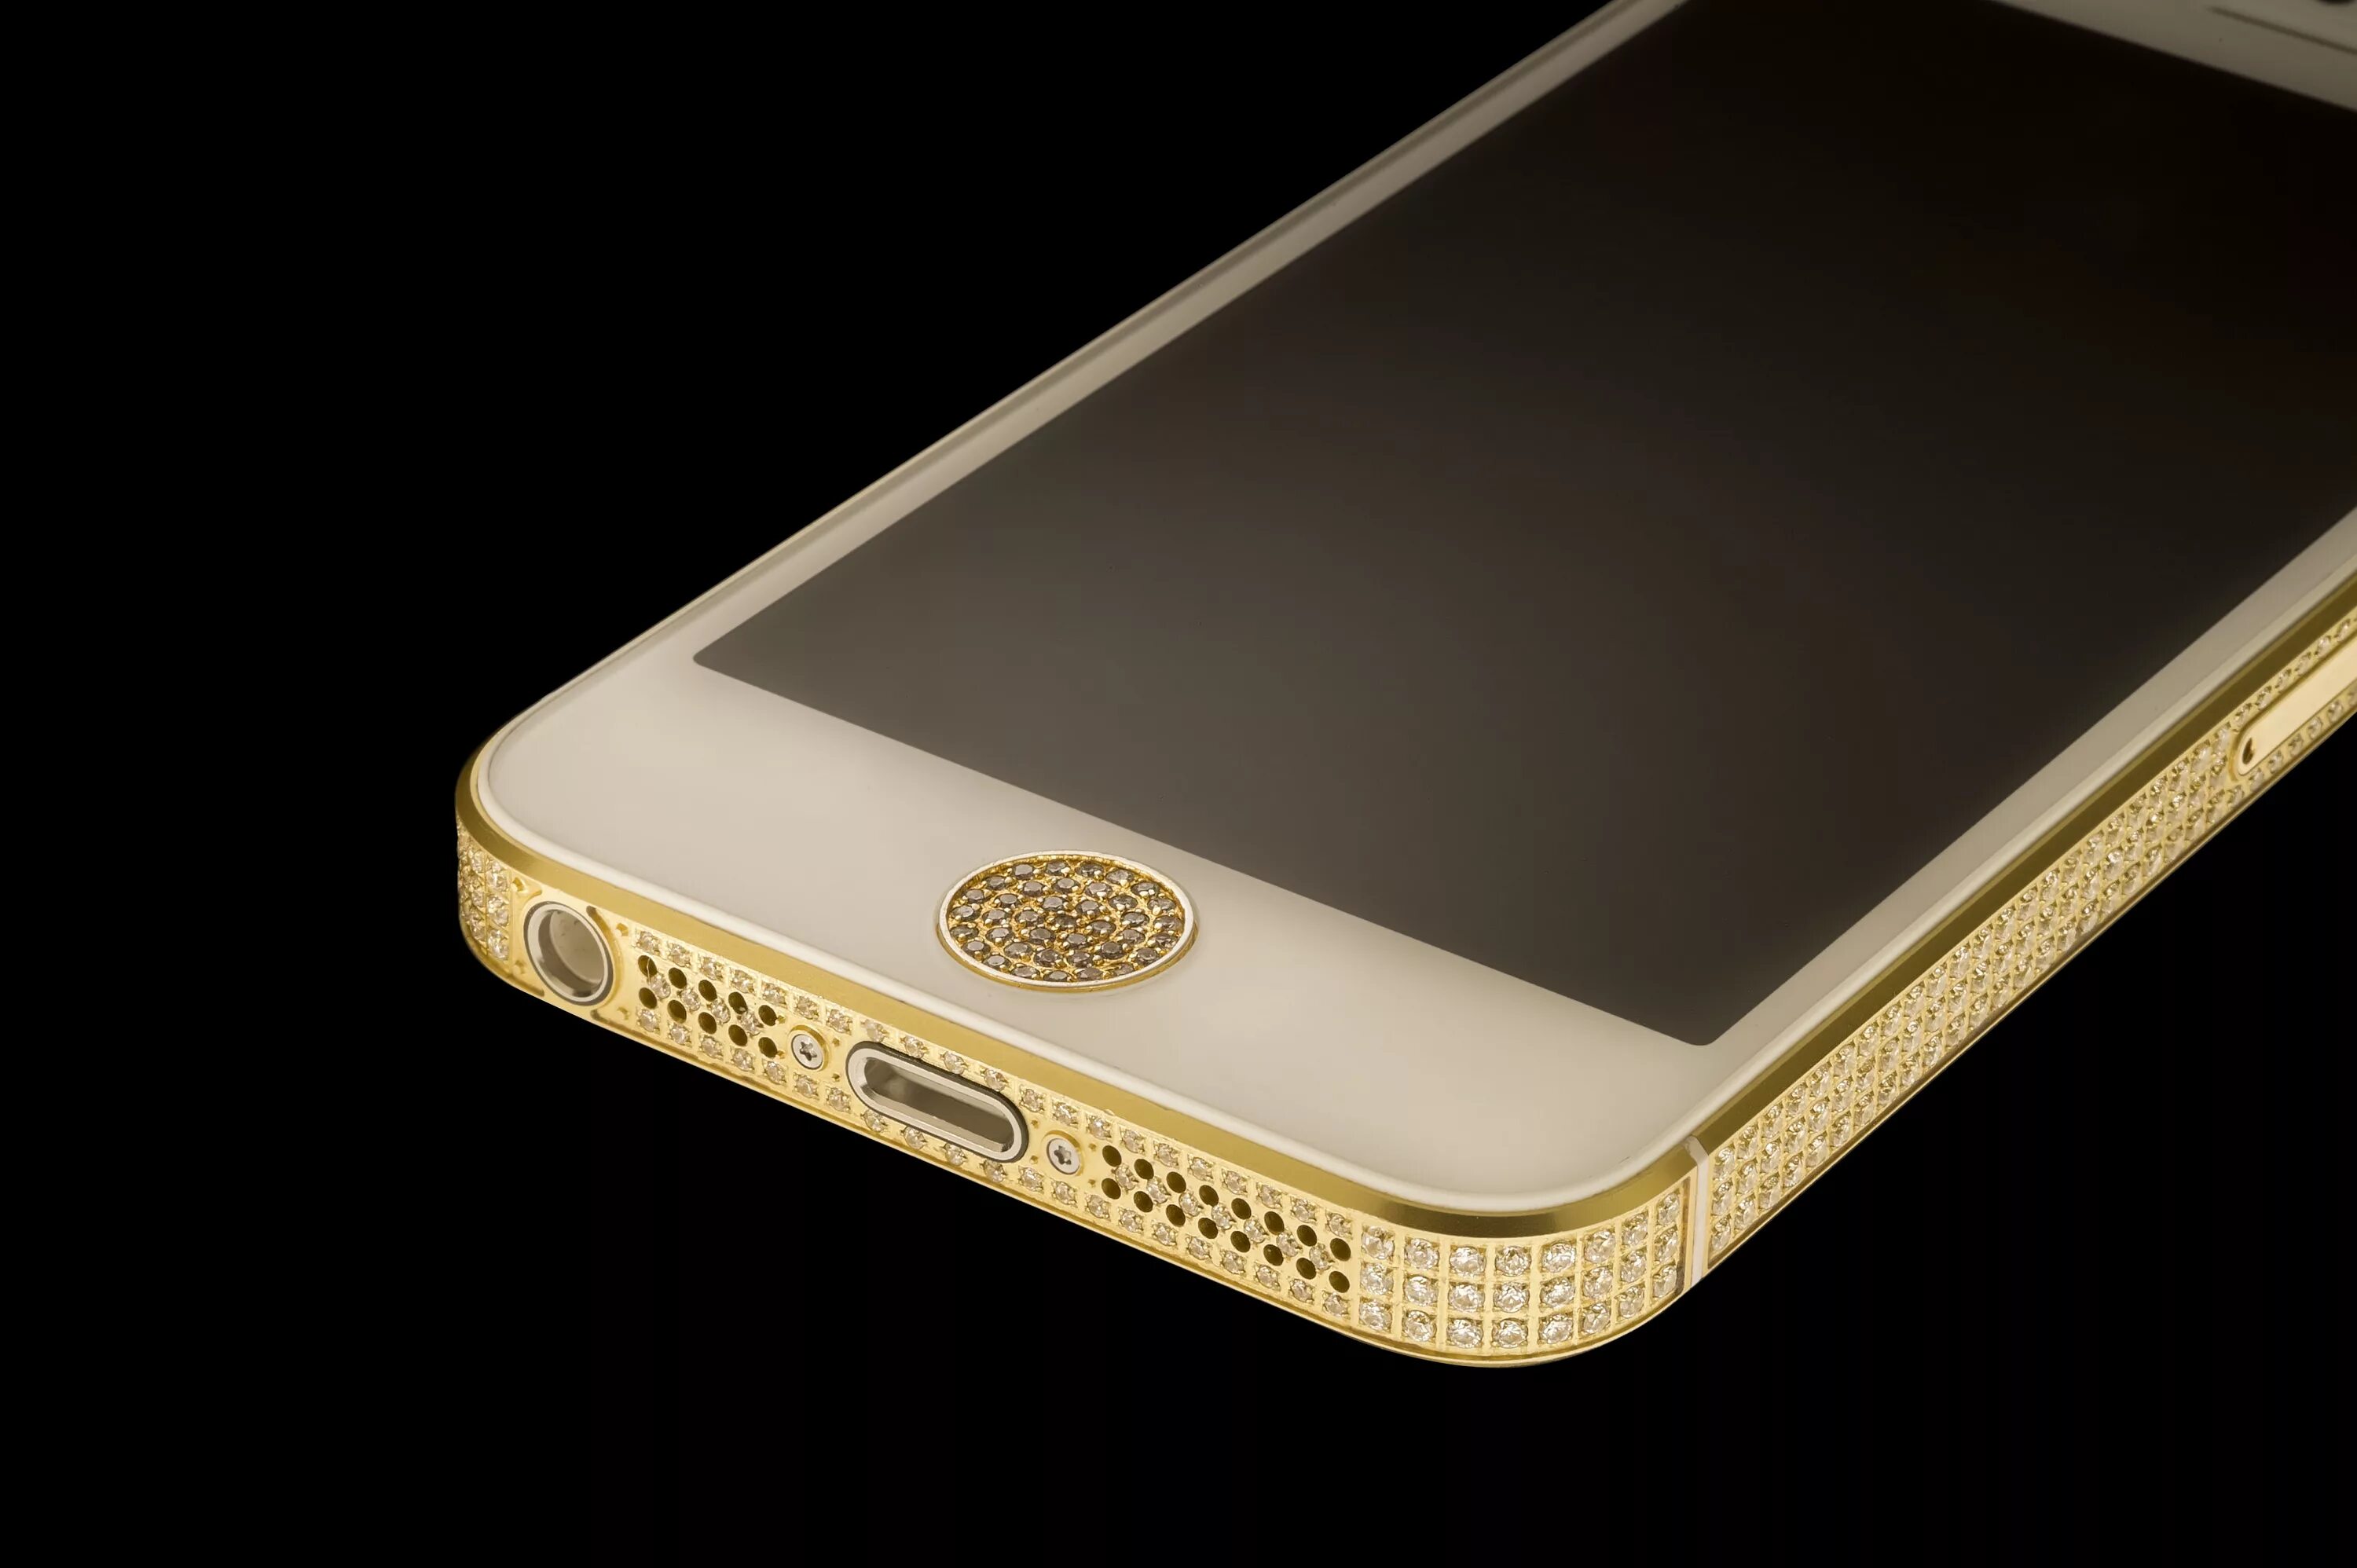 Gold mobile. Apple iphone 5 Black Diamond Edition. Iphone 5 Gold. Iphone 5s золотой. Смартфон из золота.